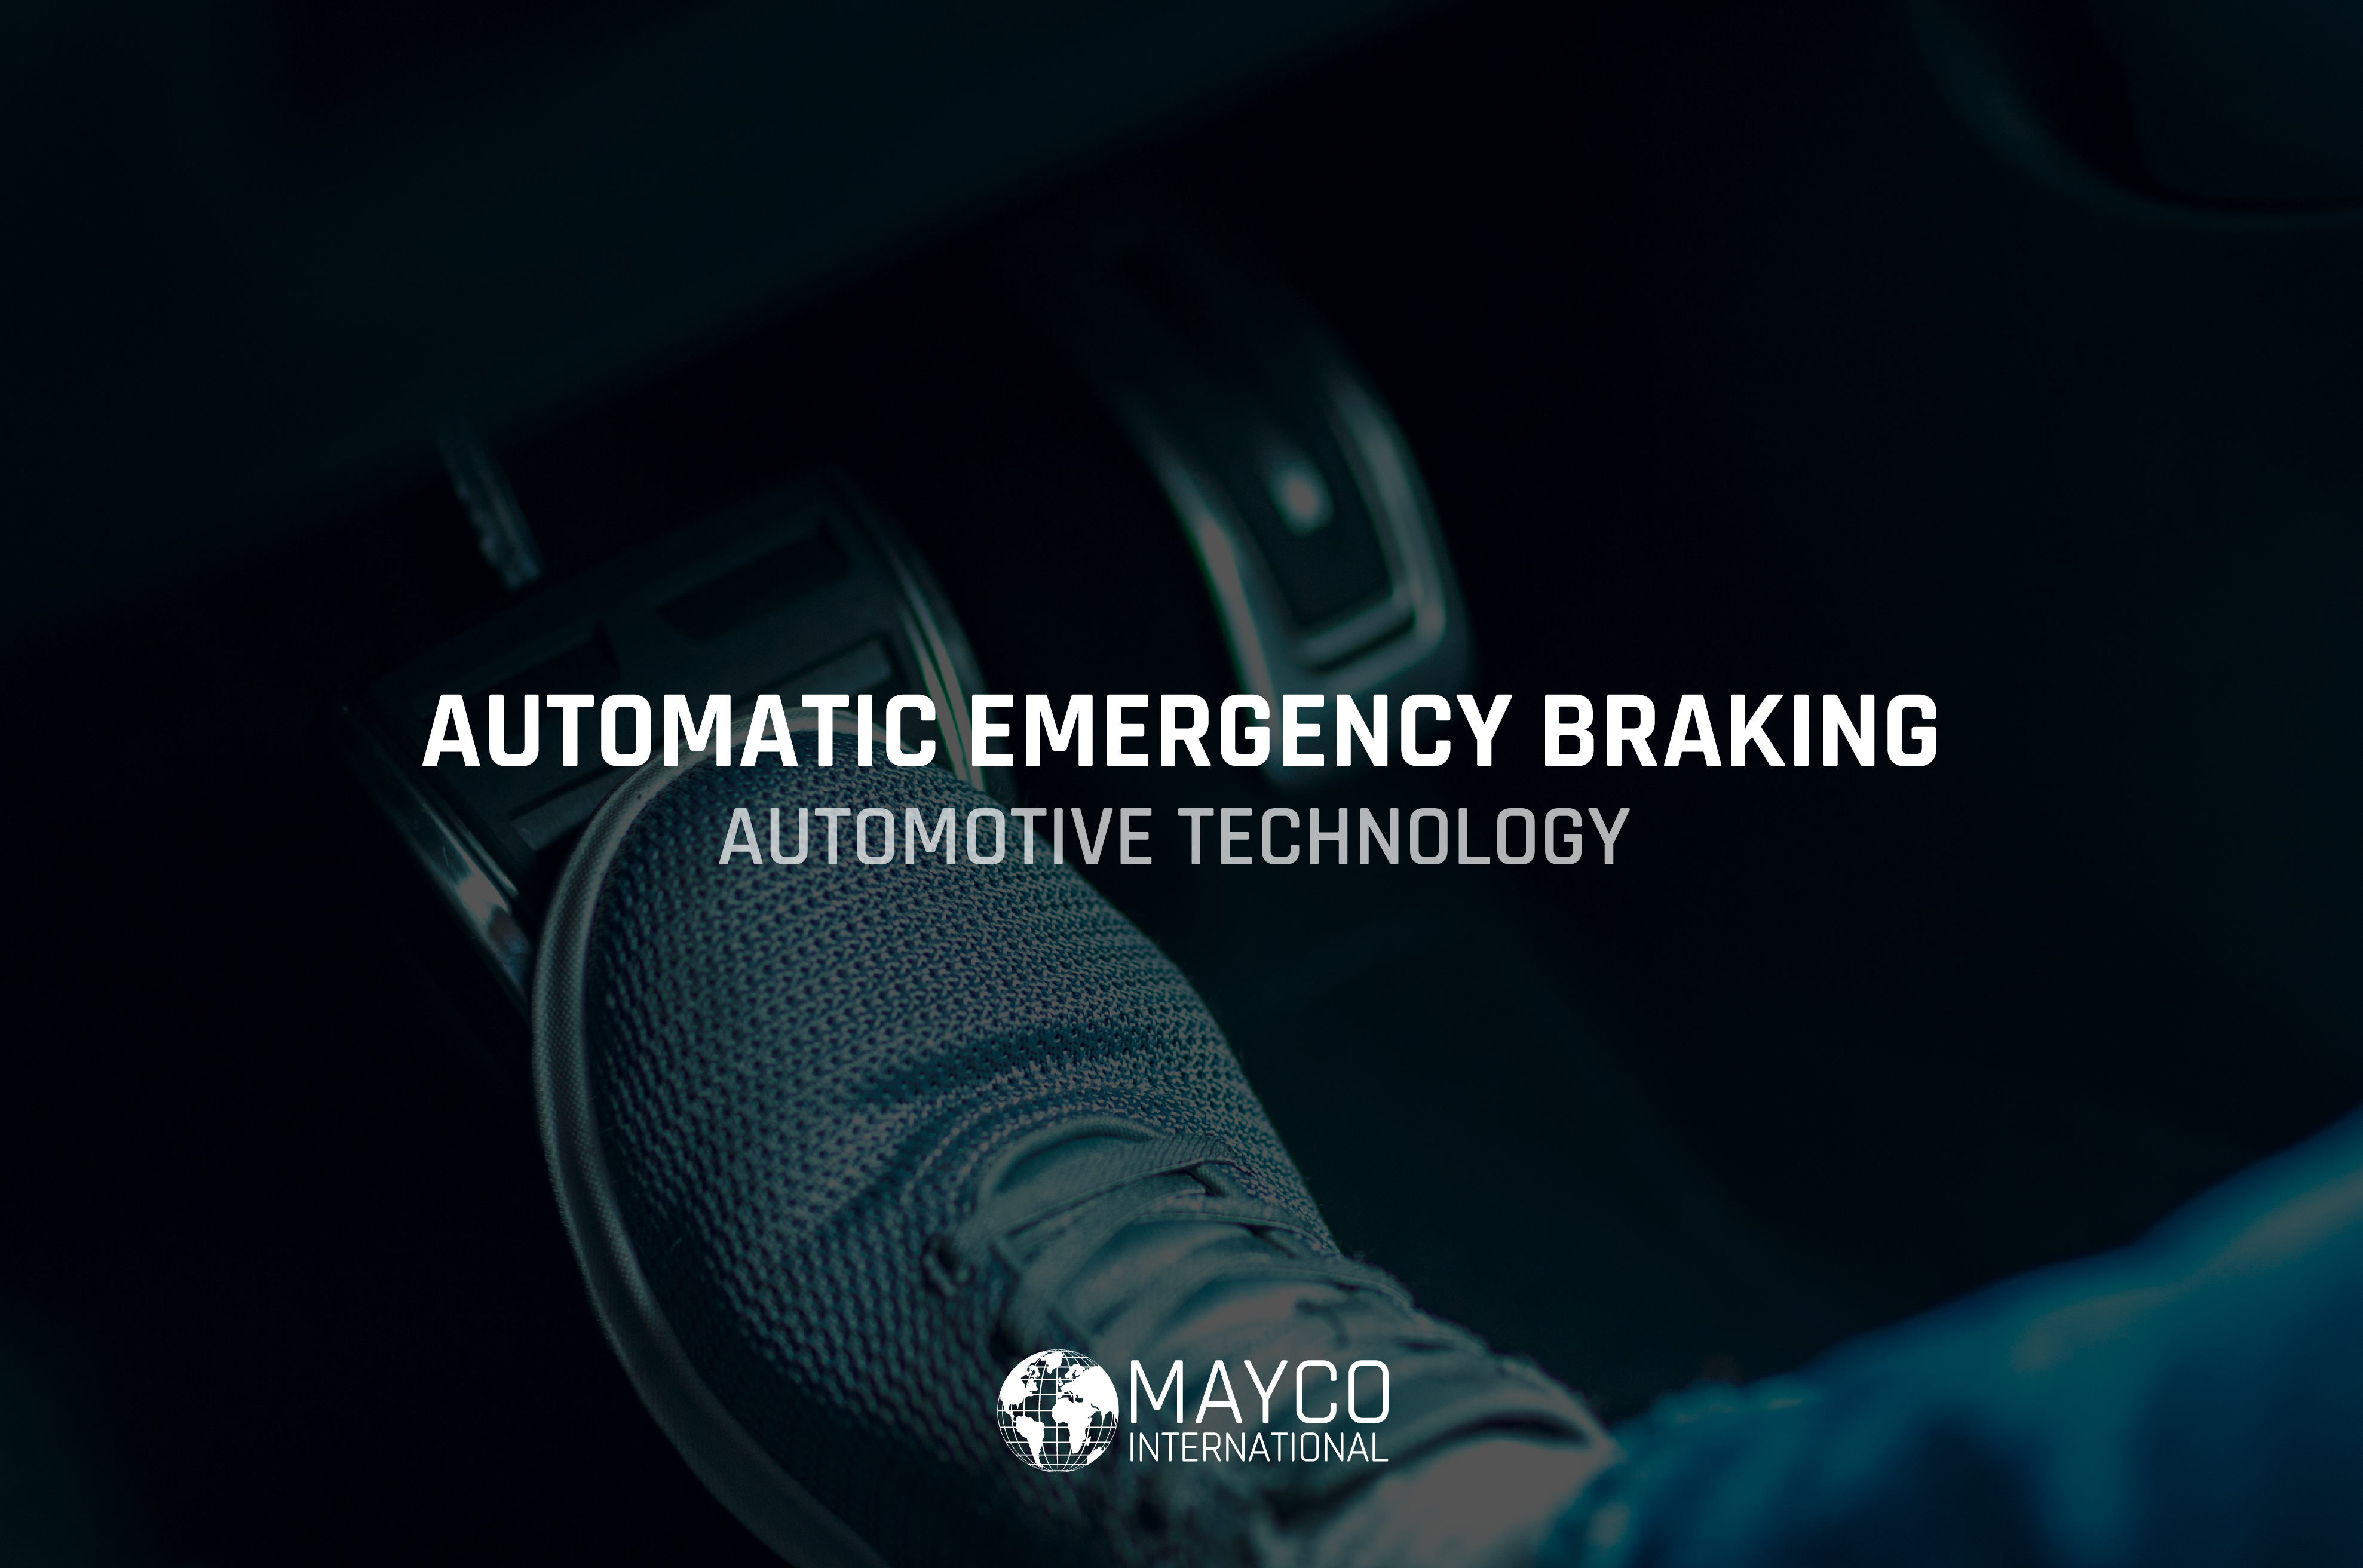 automatic emergency braking